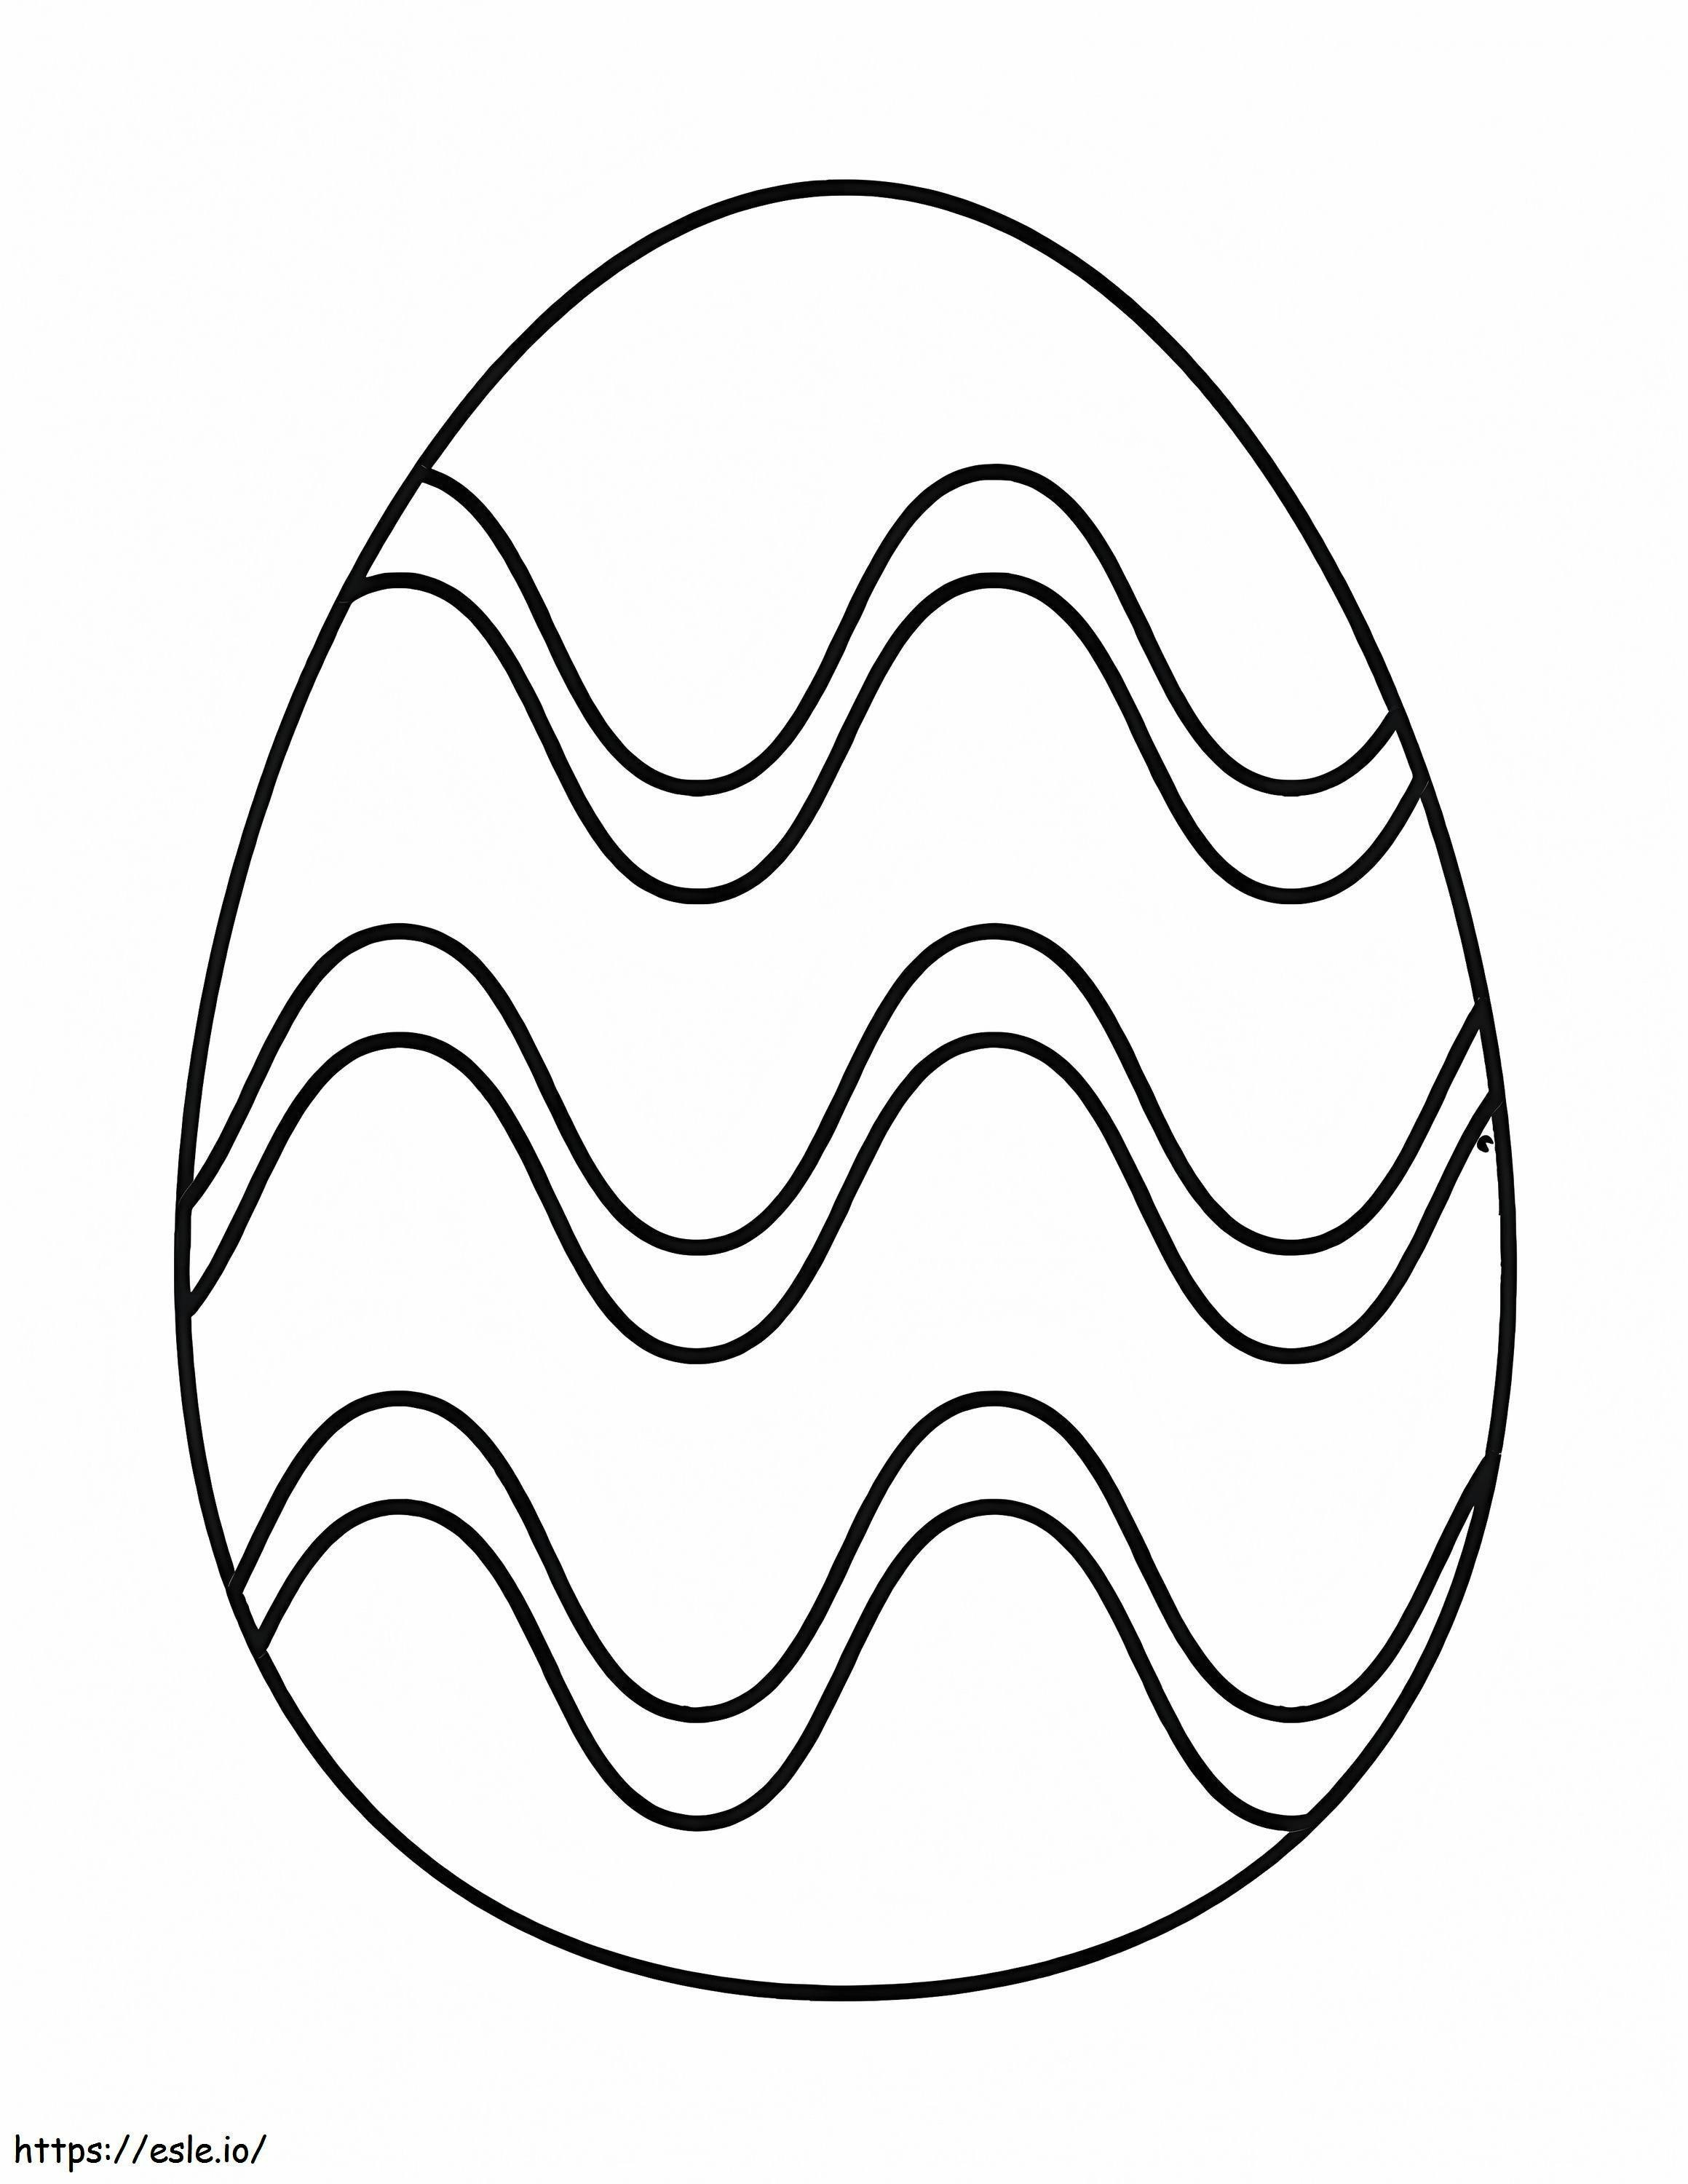 Coloriage Gros œuf à imprimer dessin